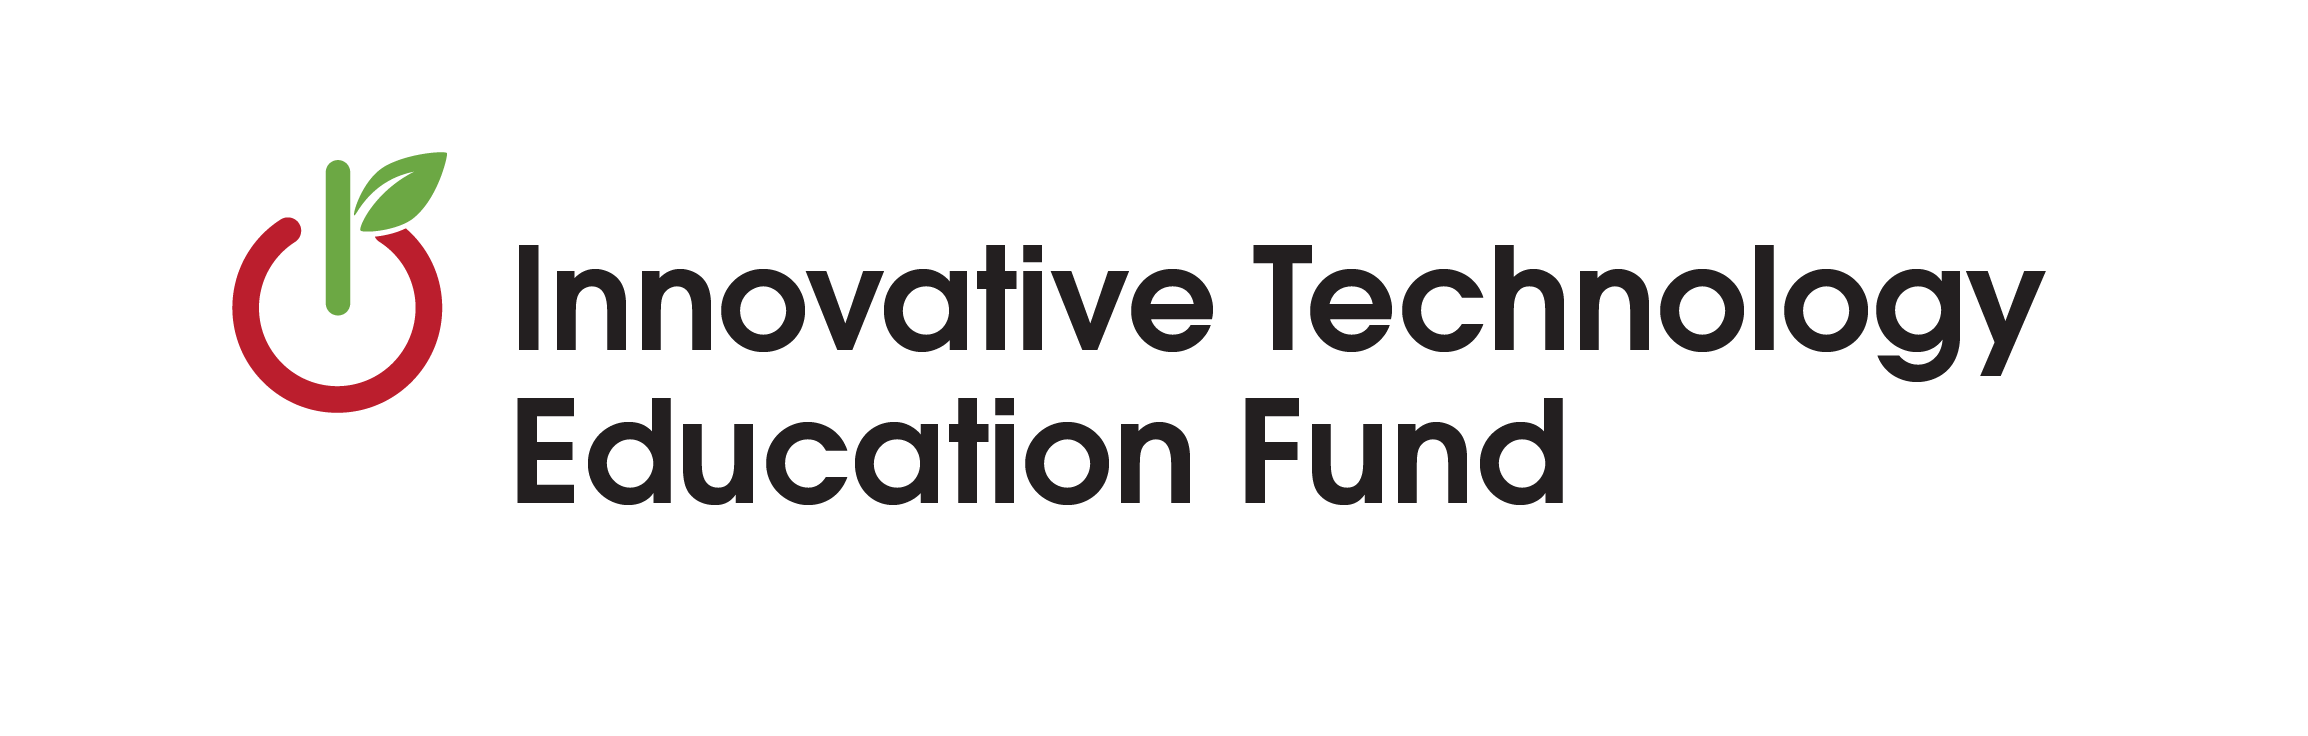 Innovative Technology Education Fund